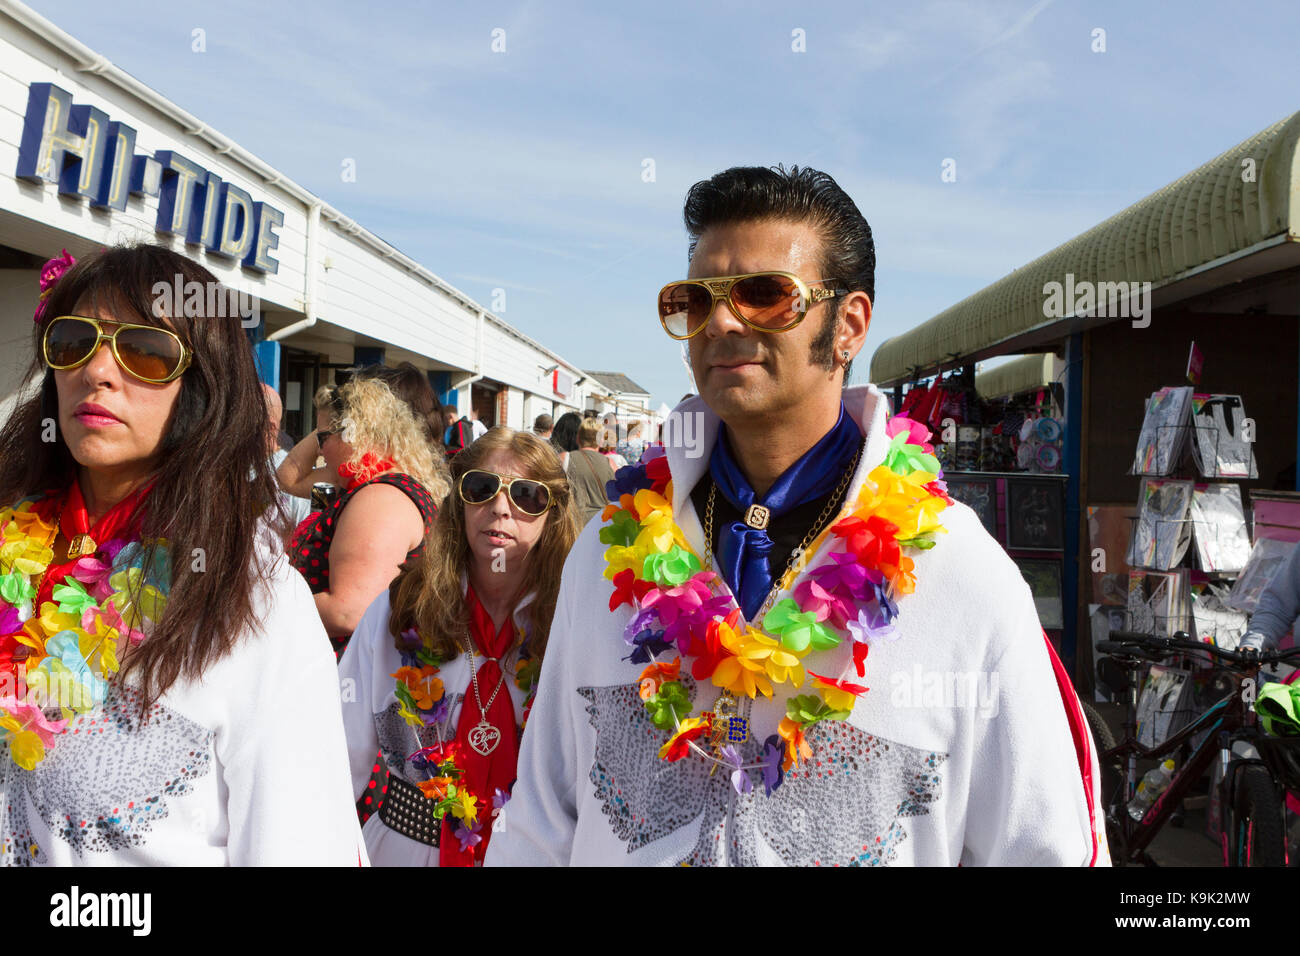 Elvis look-a-like and women in fancy dress at an Elvis Presley Festival in Porthcawl, Wales Stock Photo